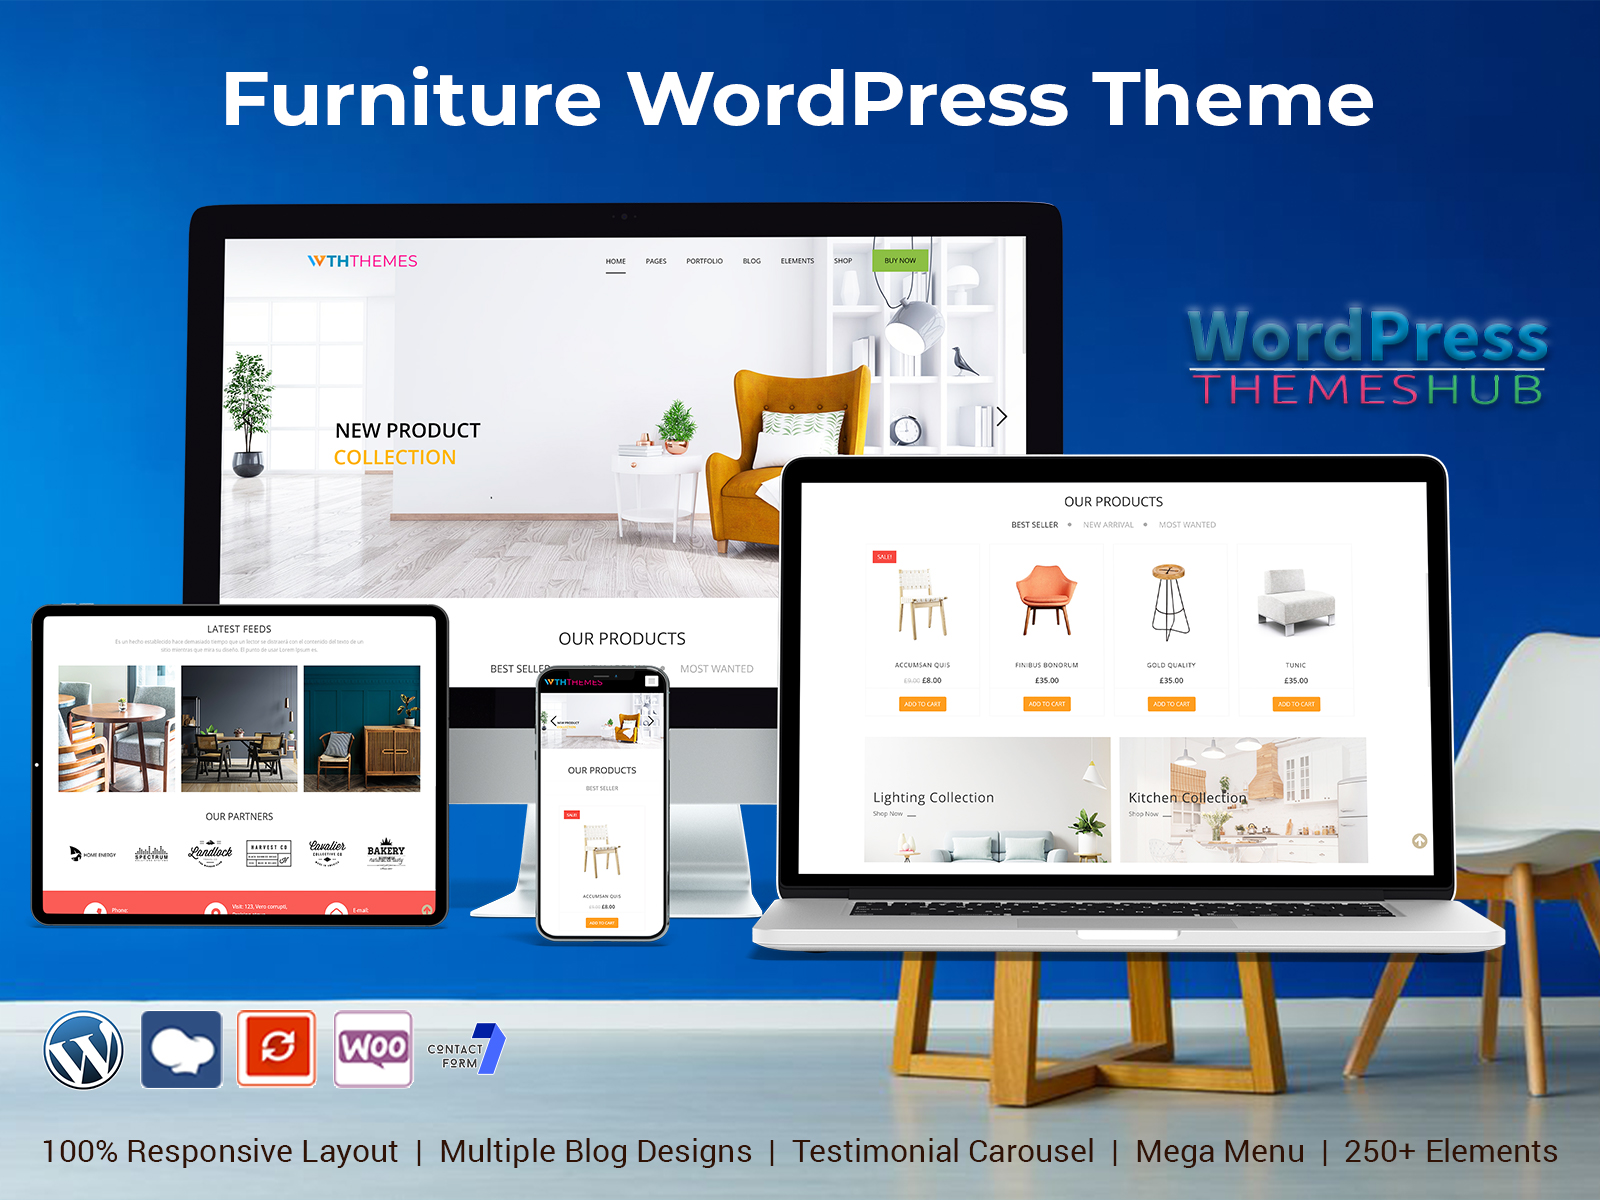 Best ECommerce WordPress Themes To Make Furniture Shop Website